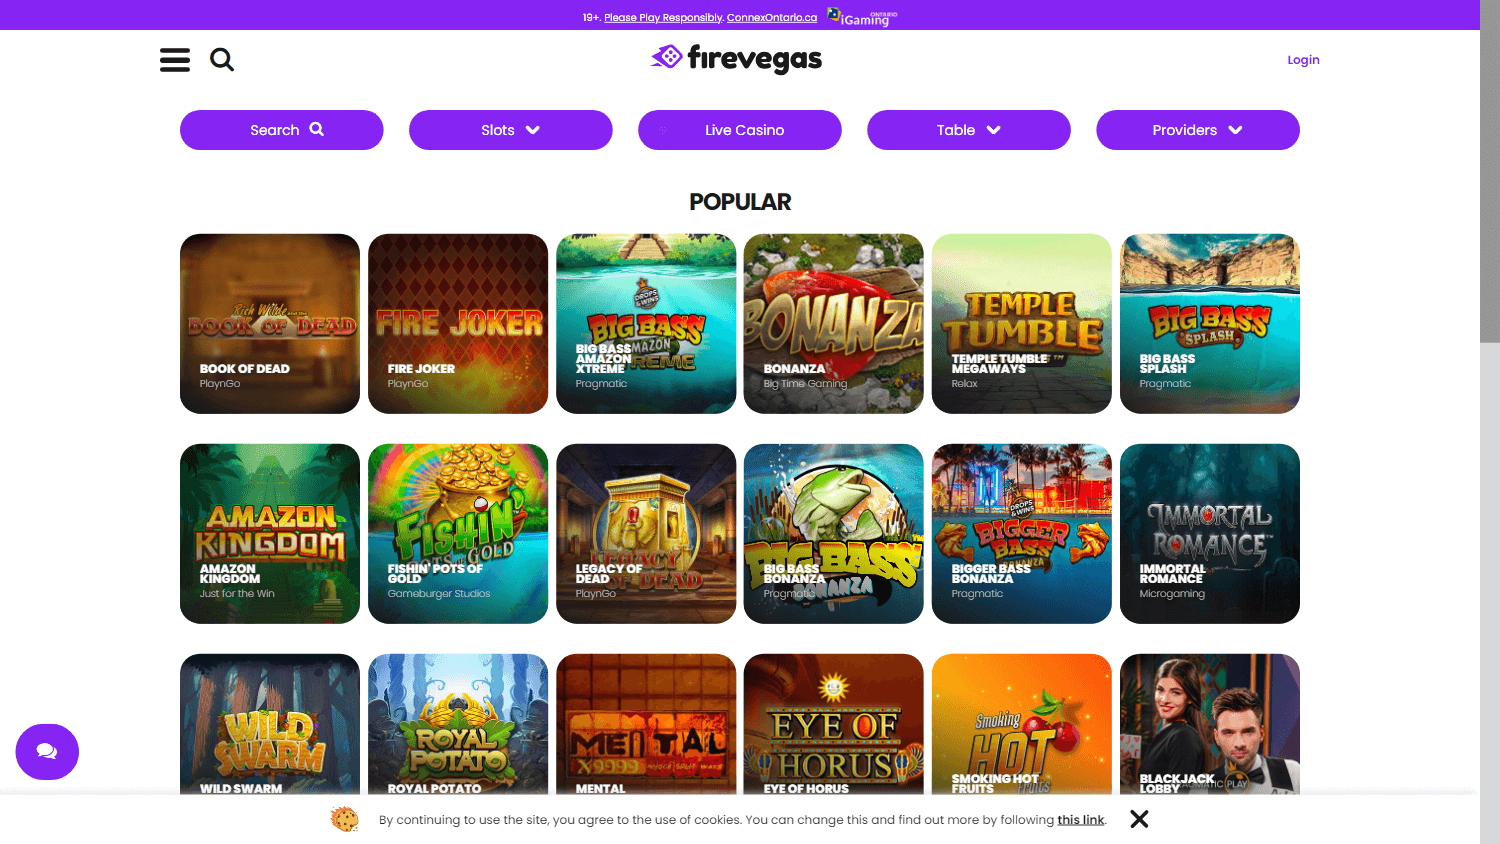 firevegas_casino_game_gallery_desktop